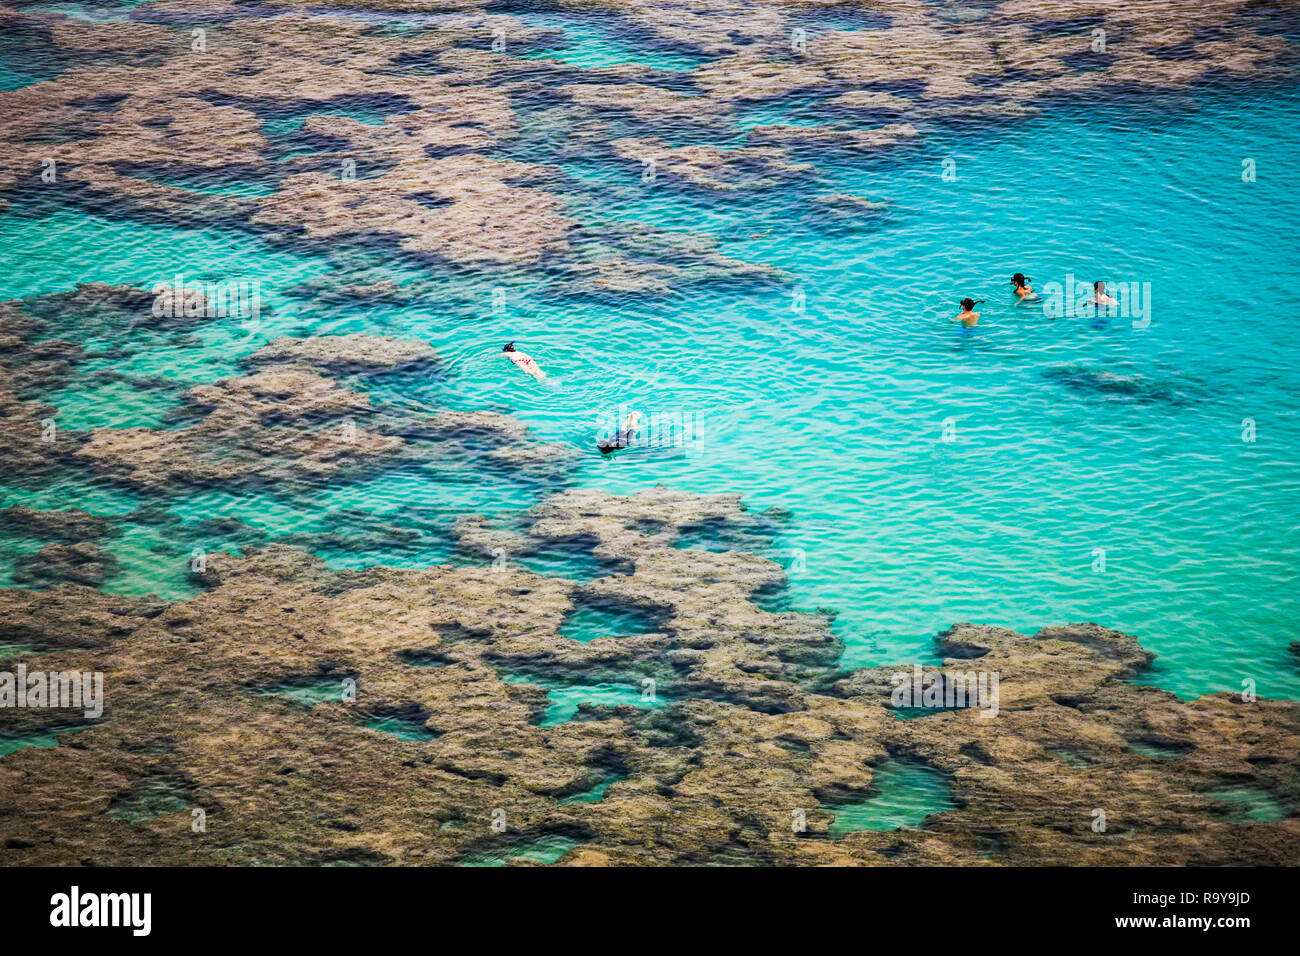 Snorkelling among coral reef in Hanauma Bay, Oahu, Hawaii Stock Photo